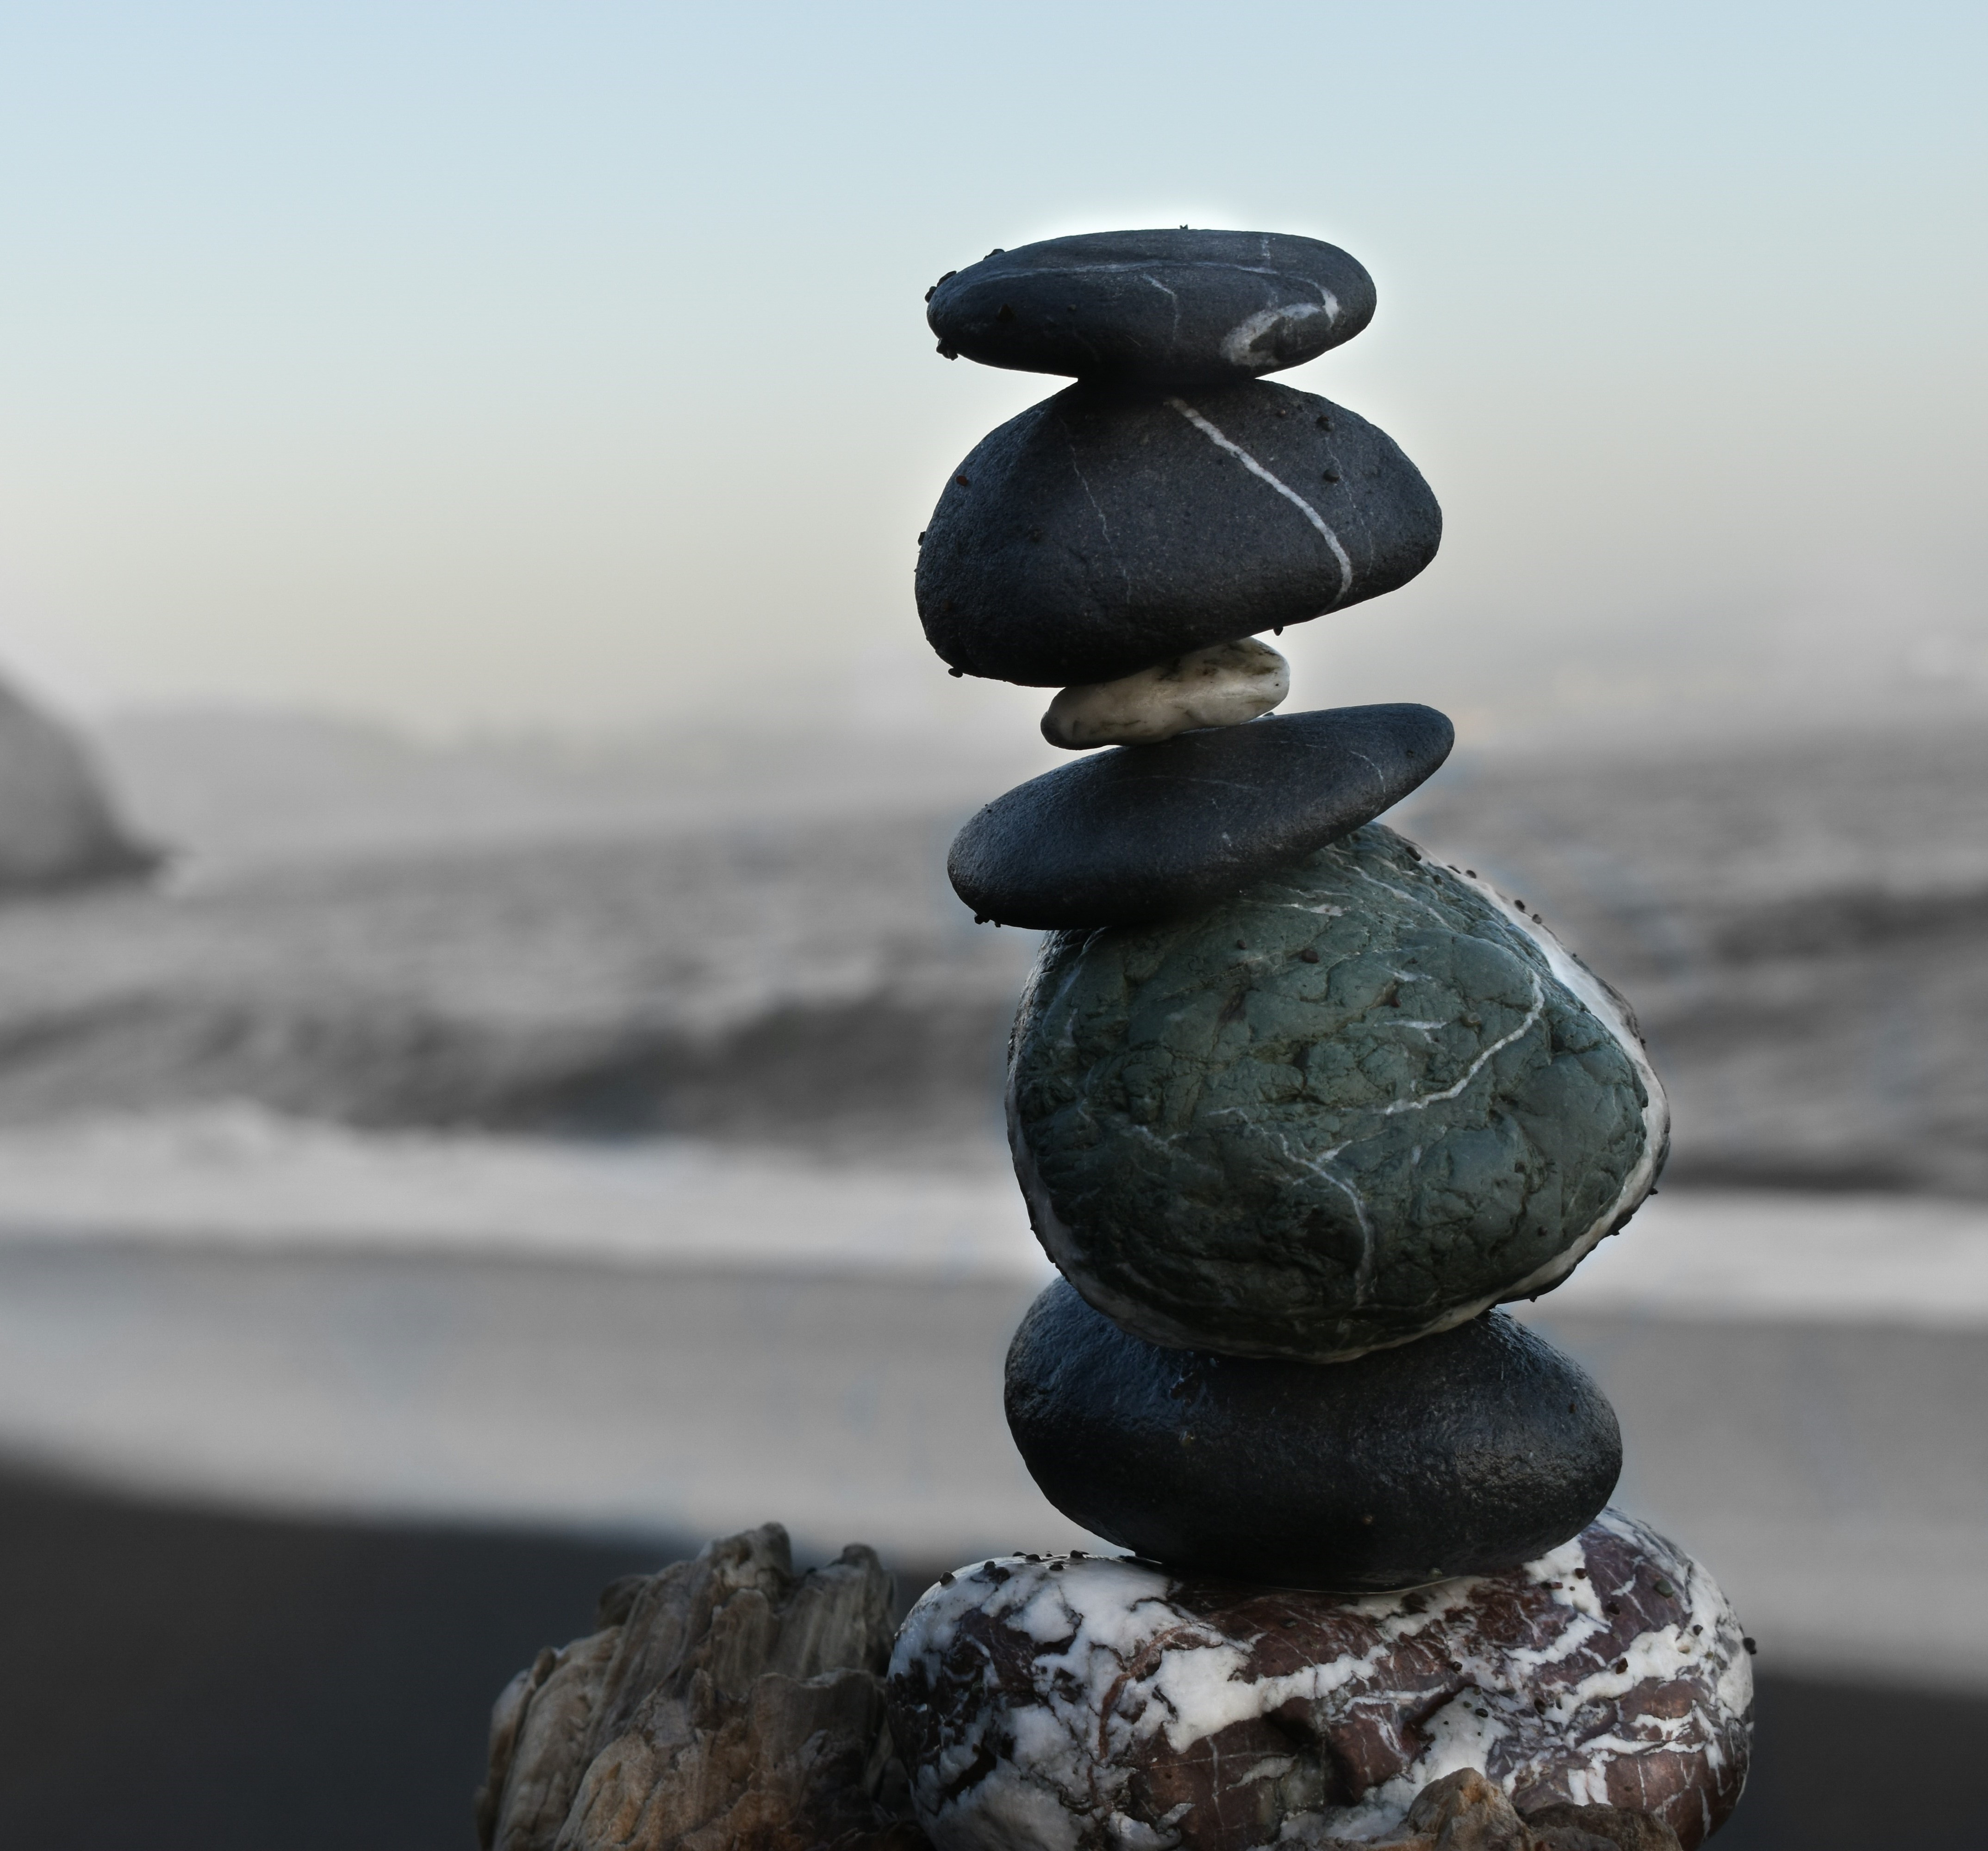 Stones balanced